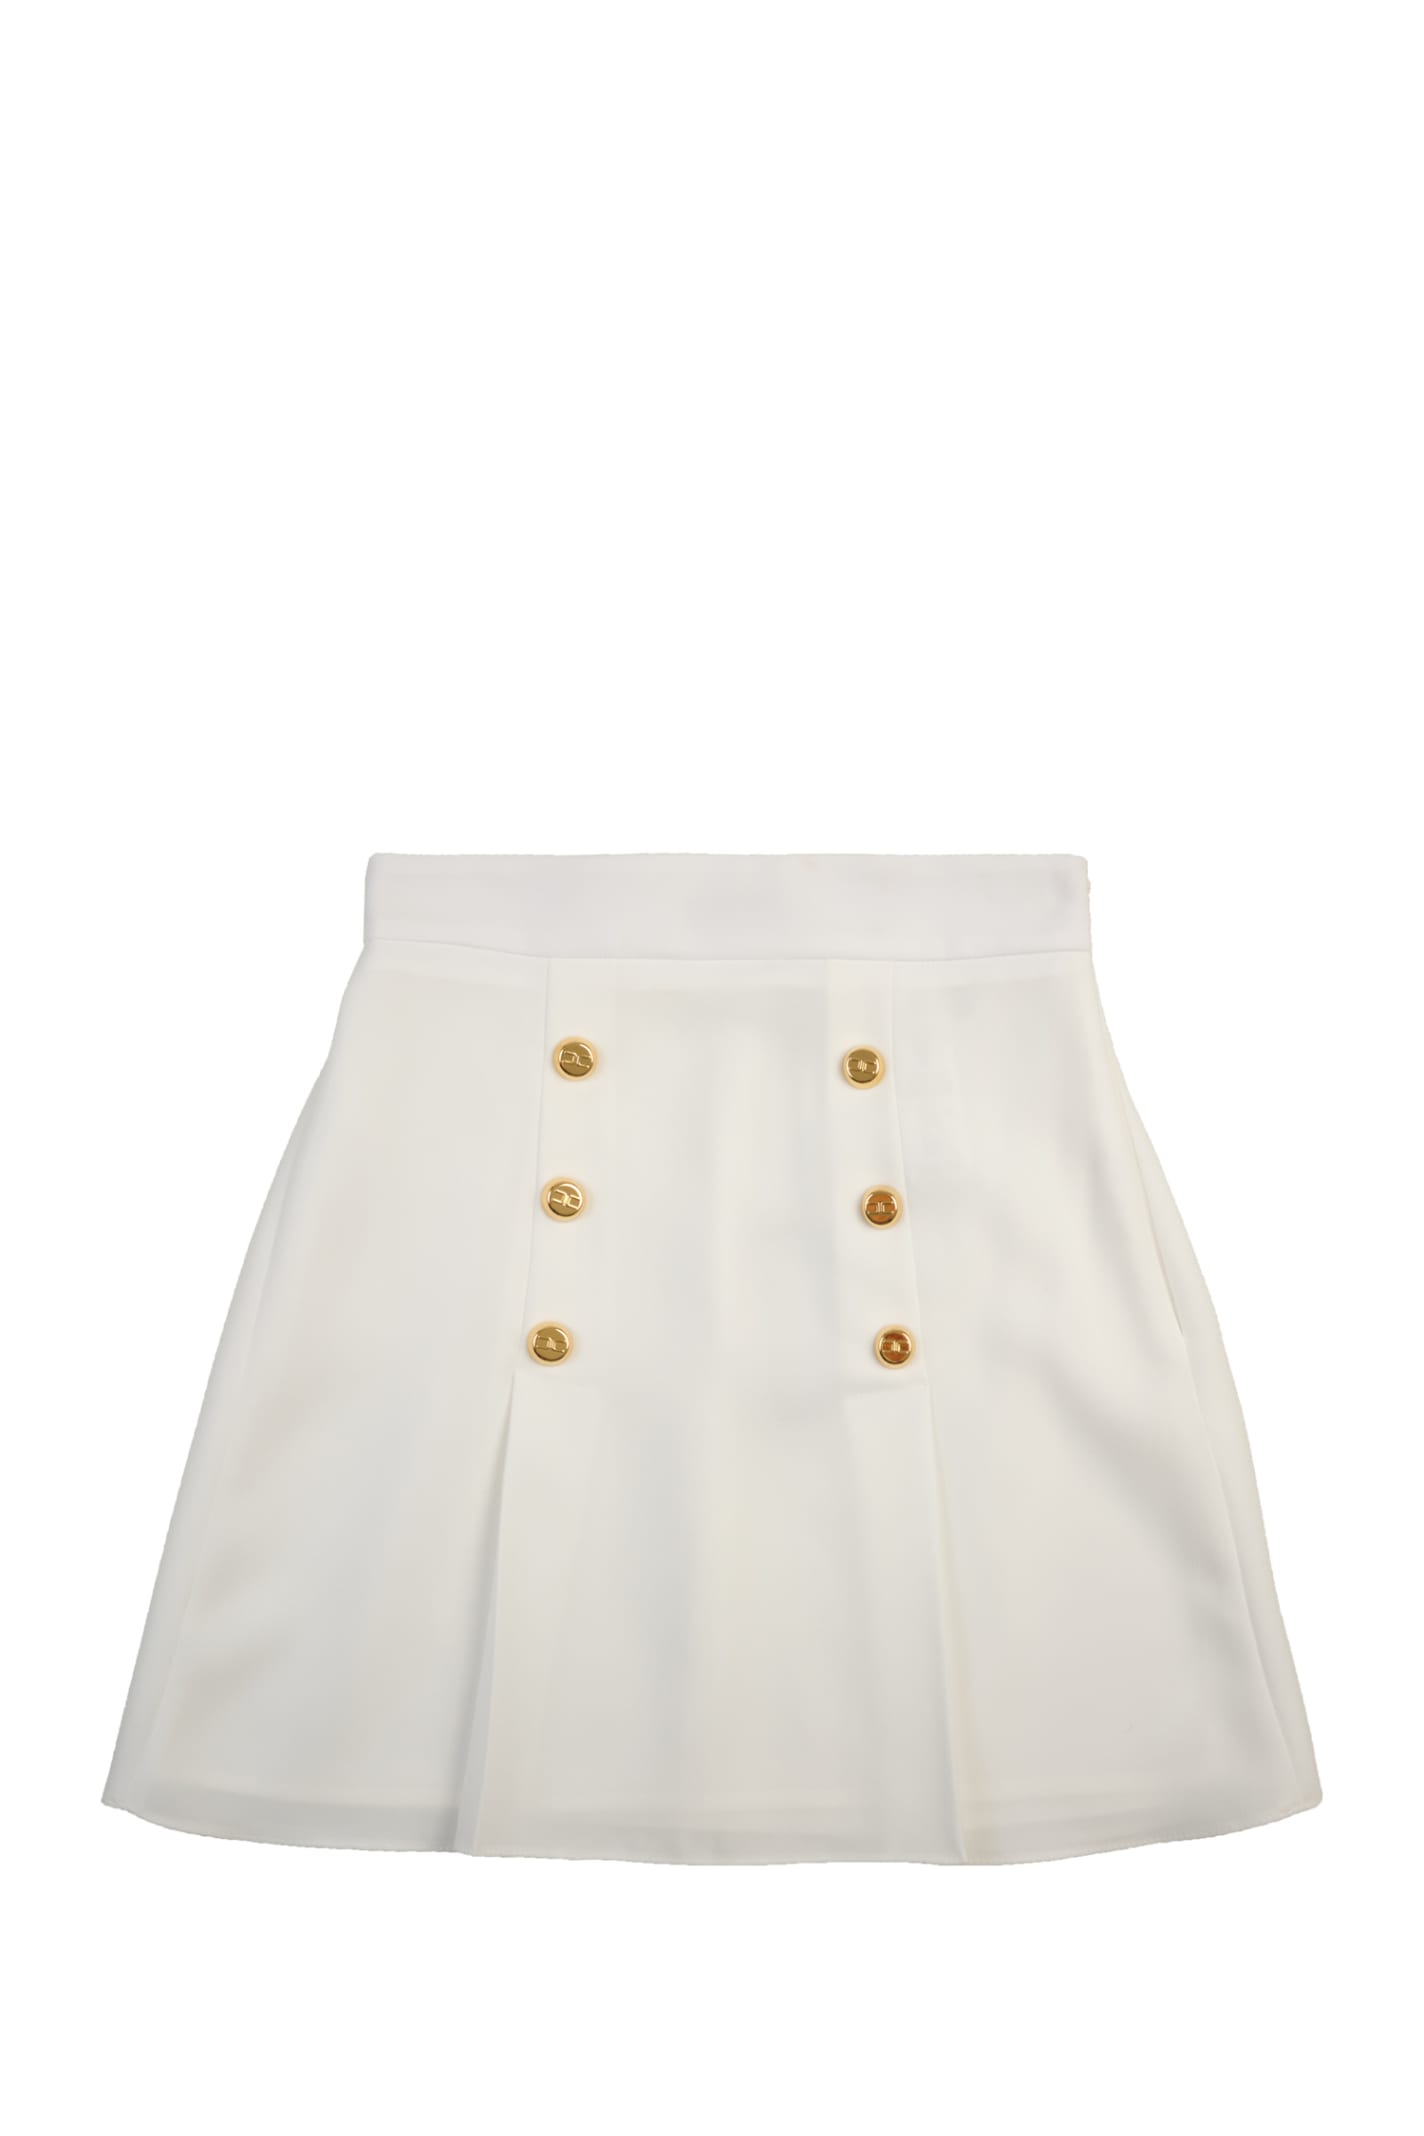 Elisabetta Franchi Short Skirt With Logoed Buttons